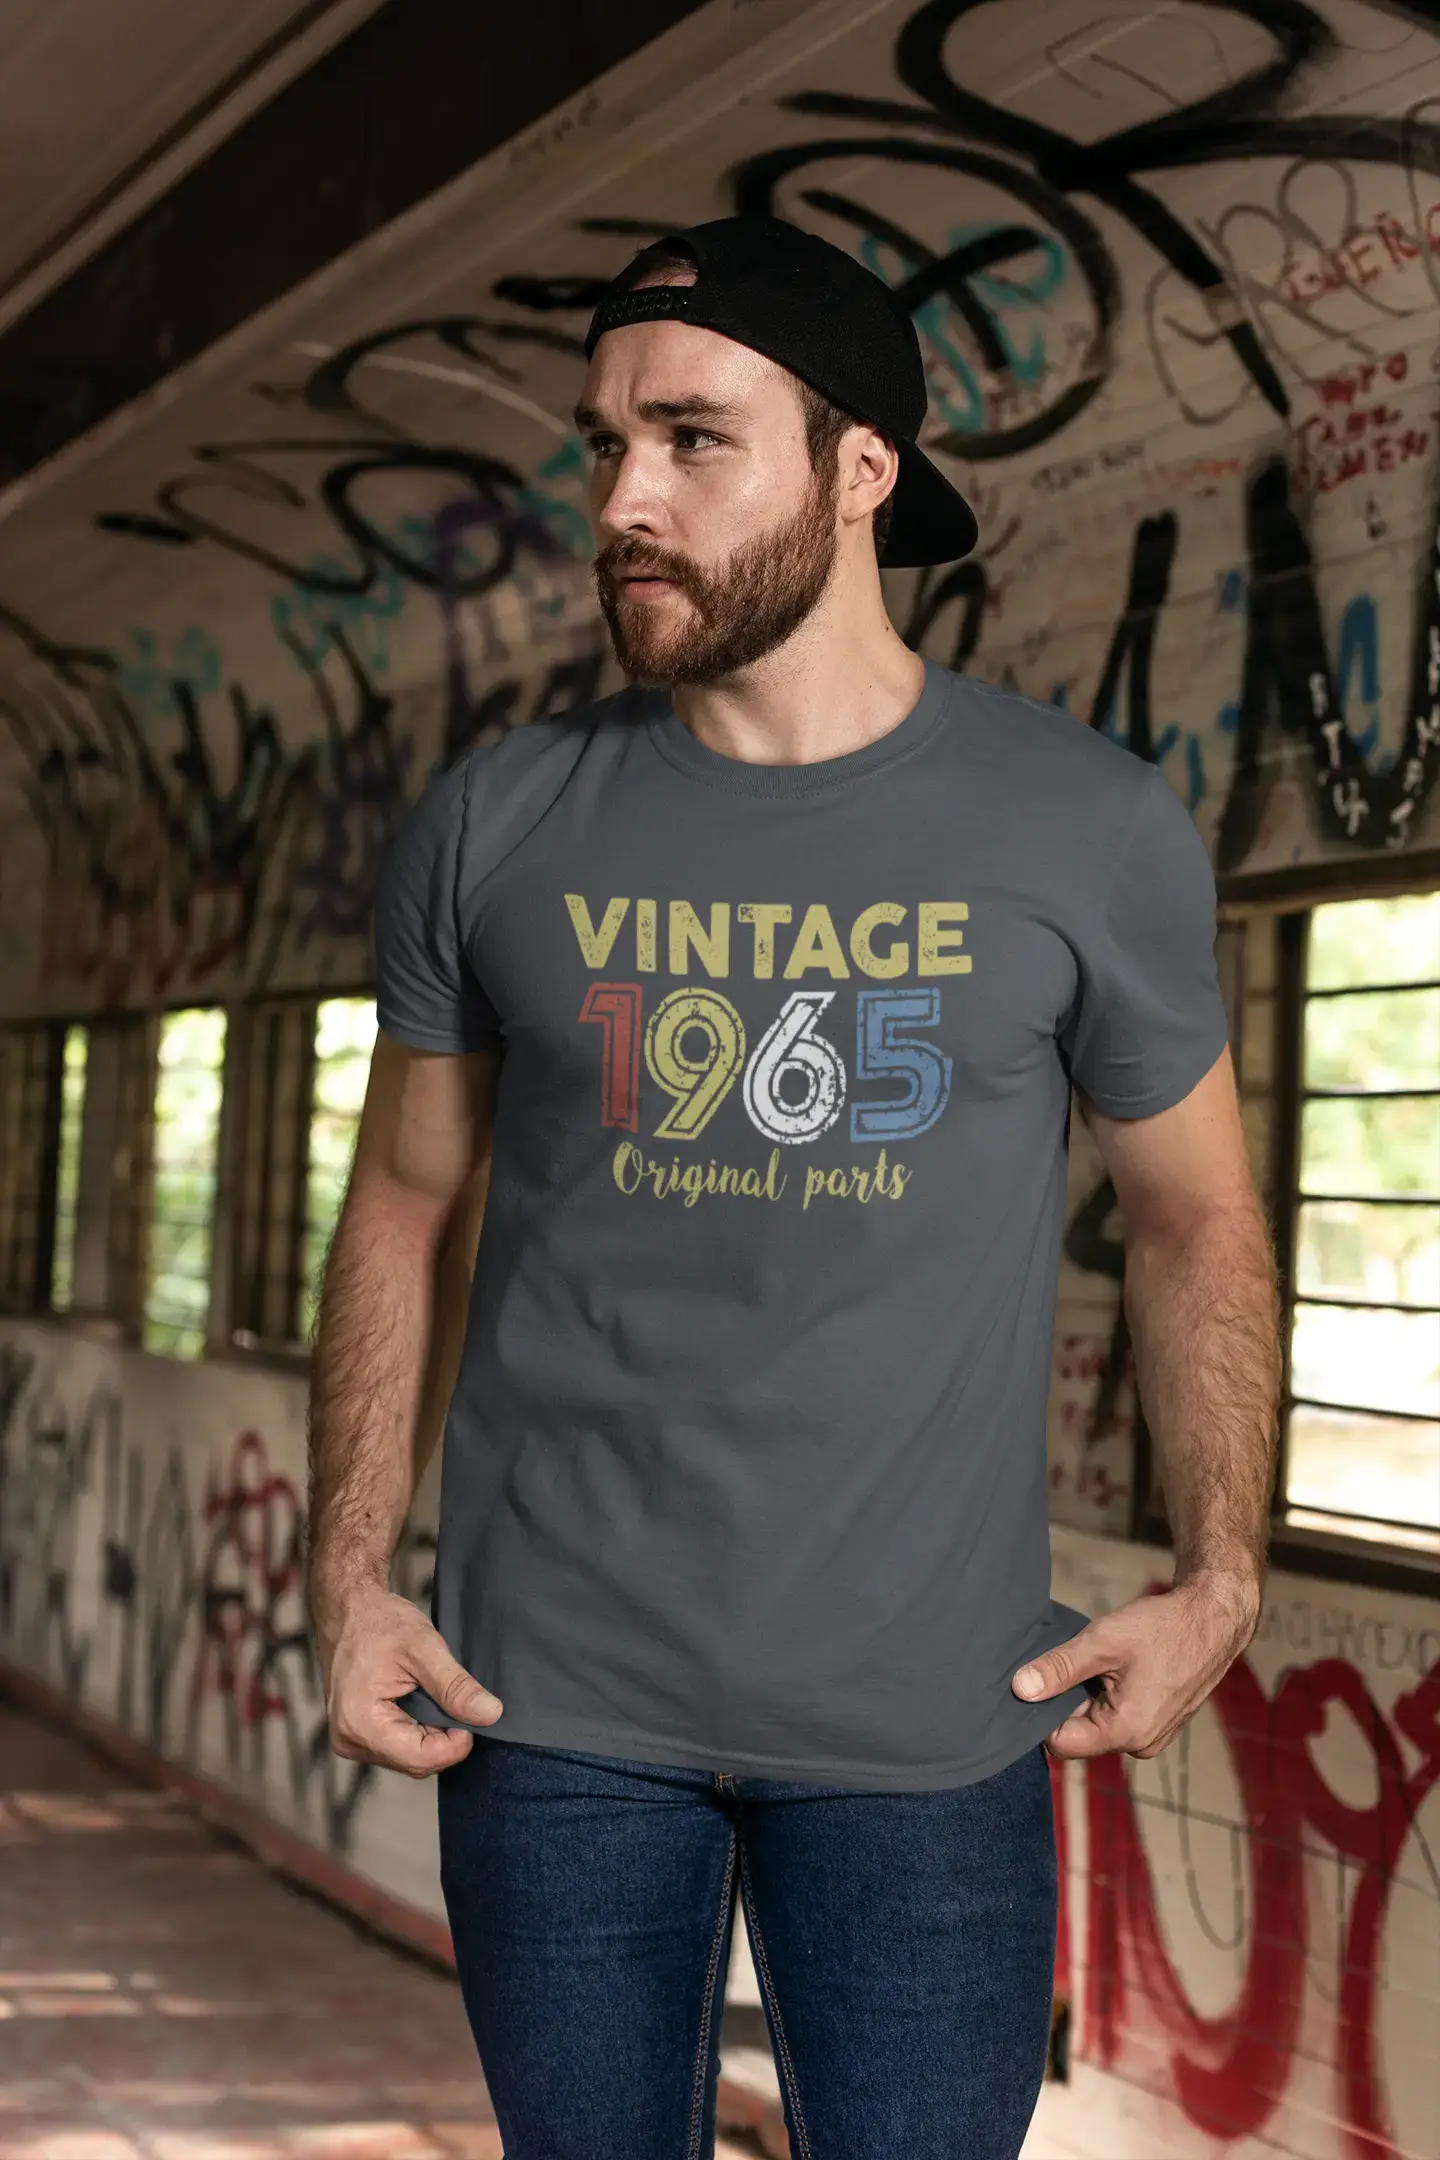 ULTRABASIC - Graphic Printed Men's Vintage 1965 T-Shirt Deep Black